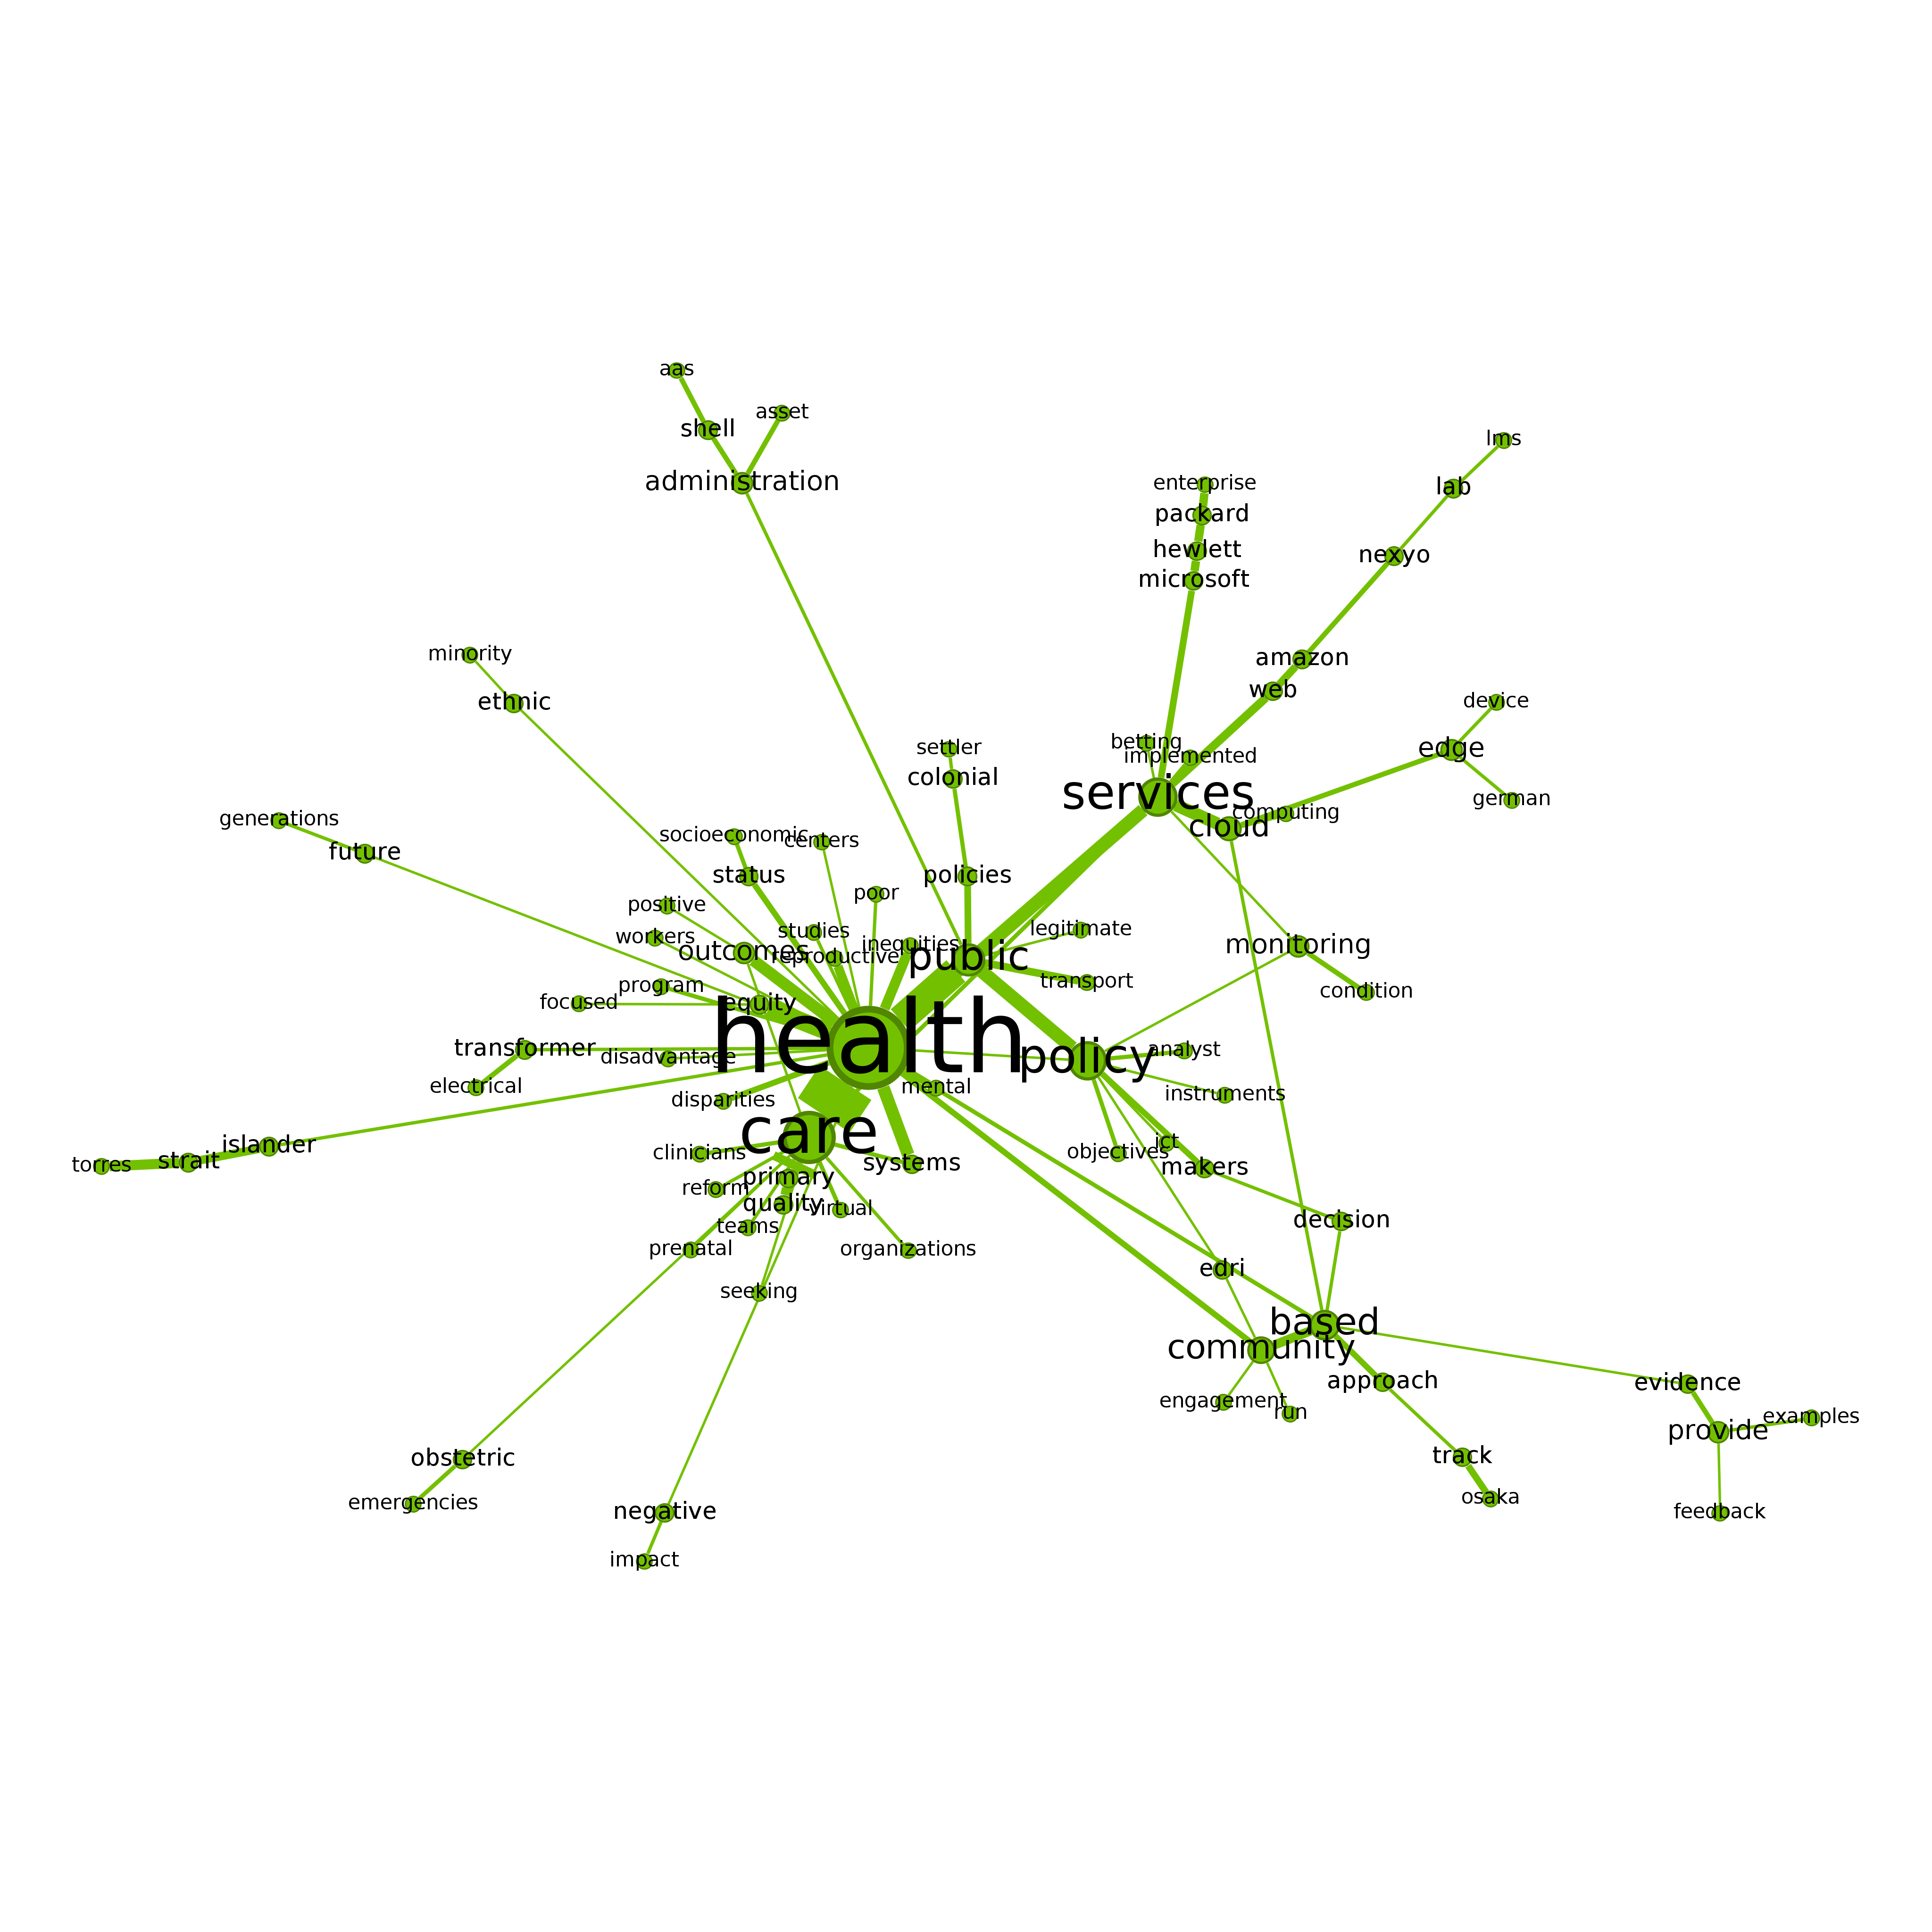 Semantic network - health cluster